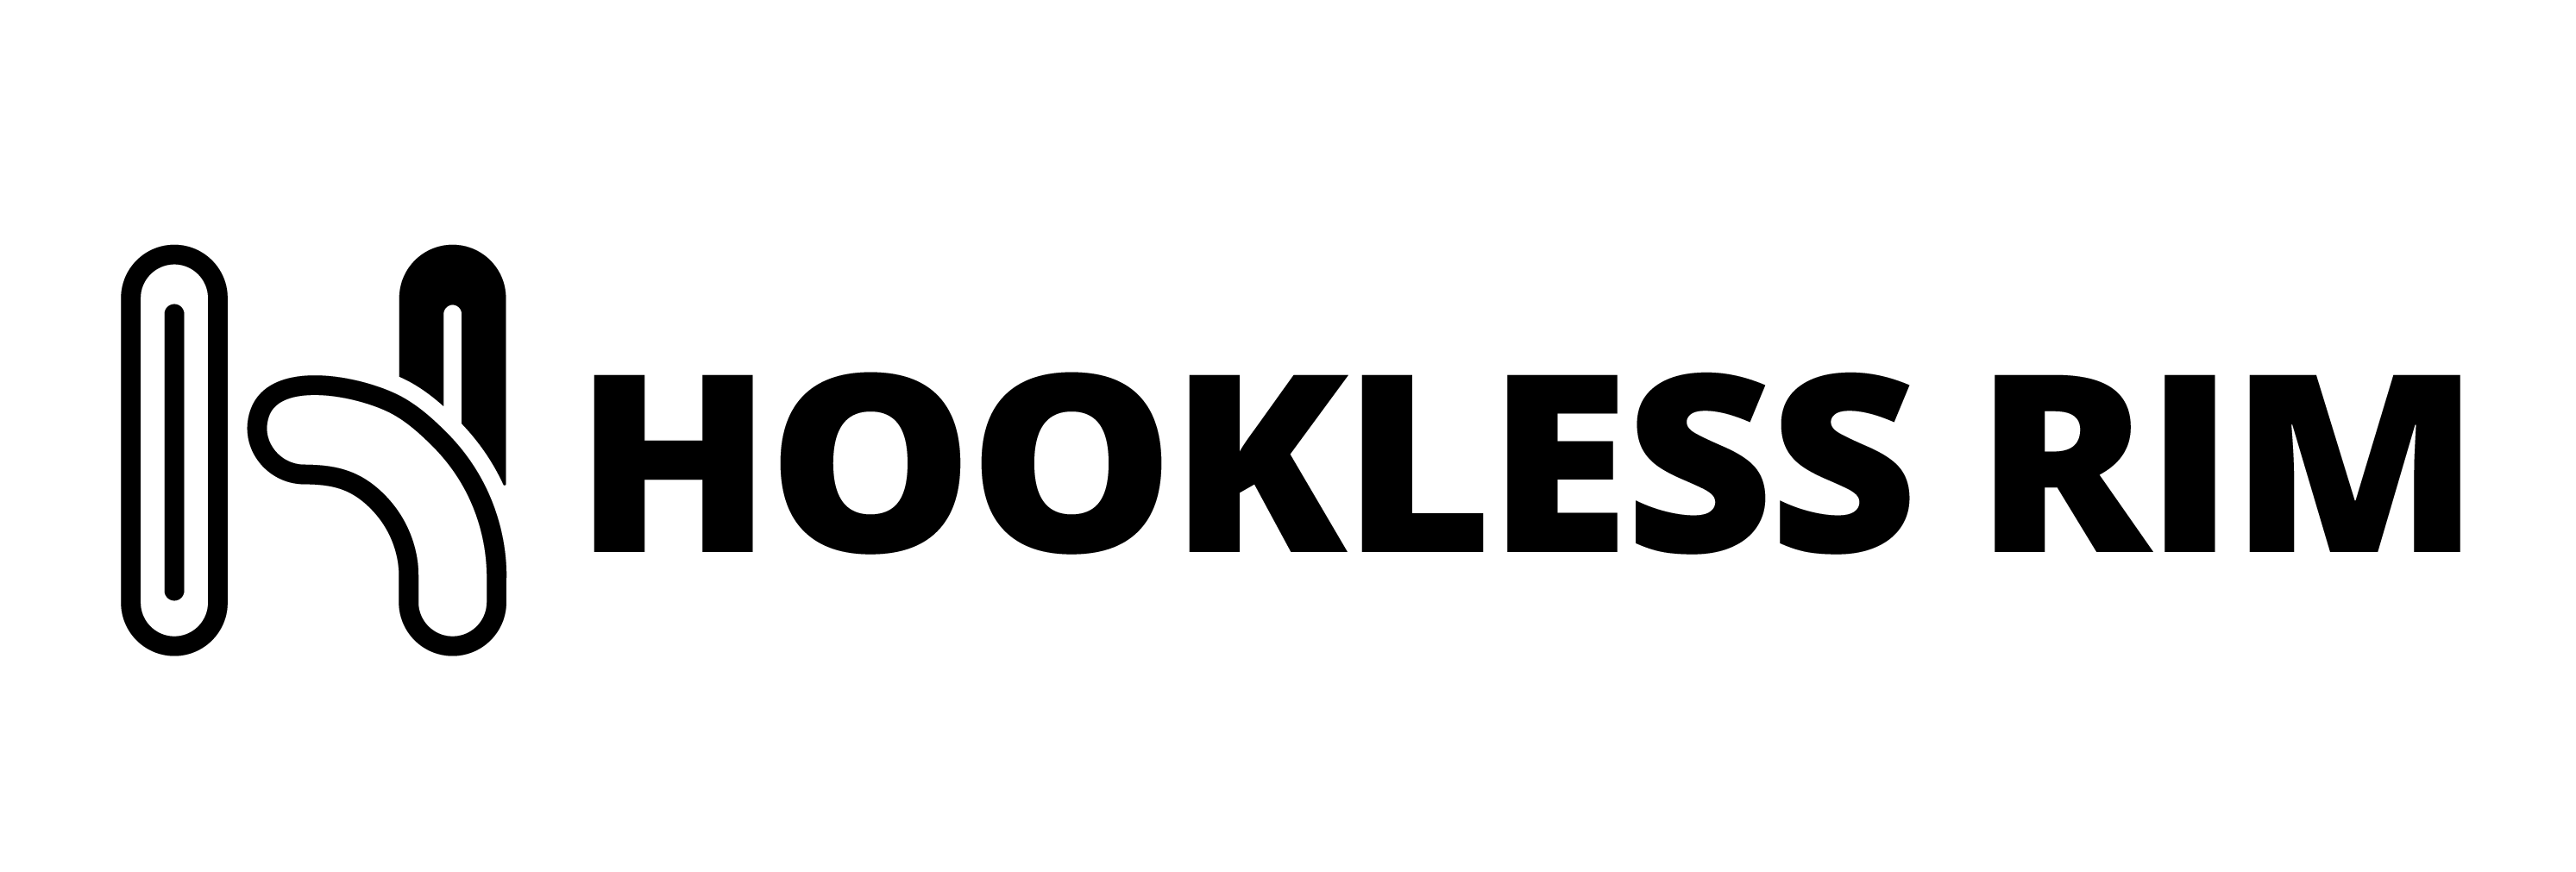 hookless rim